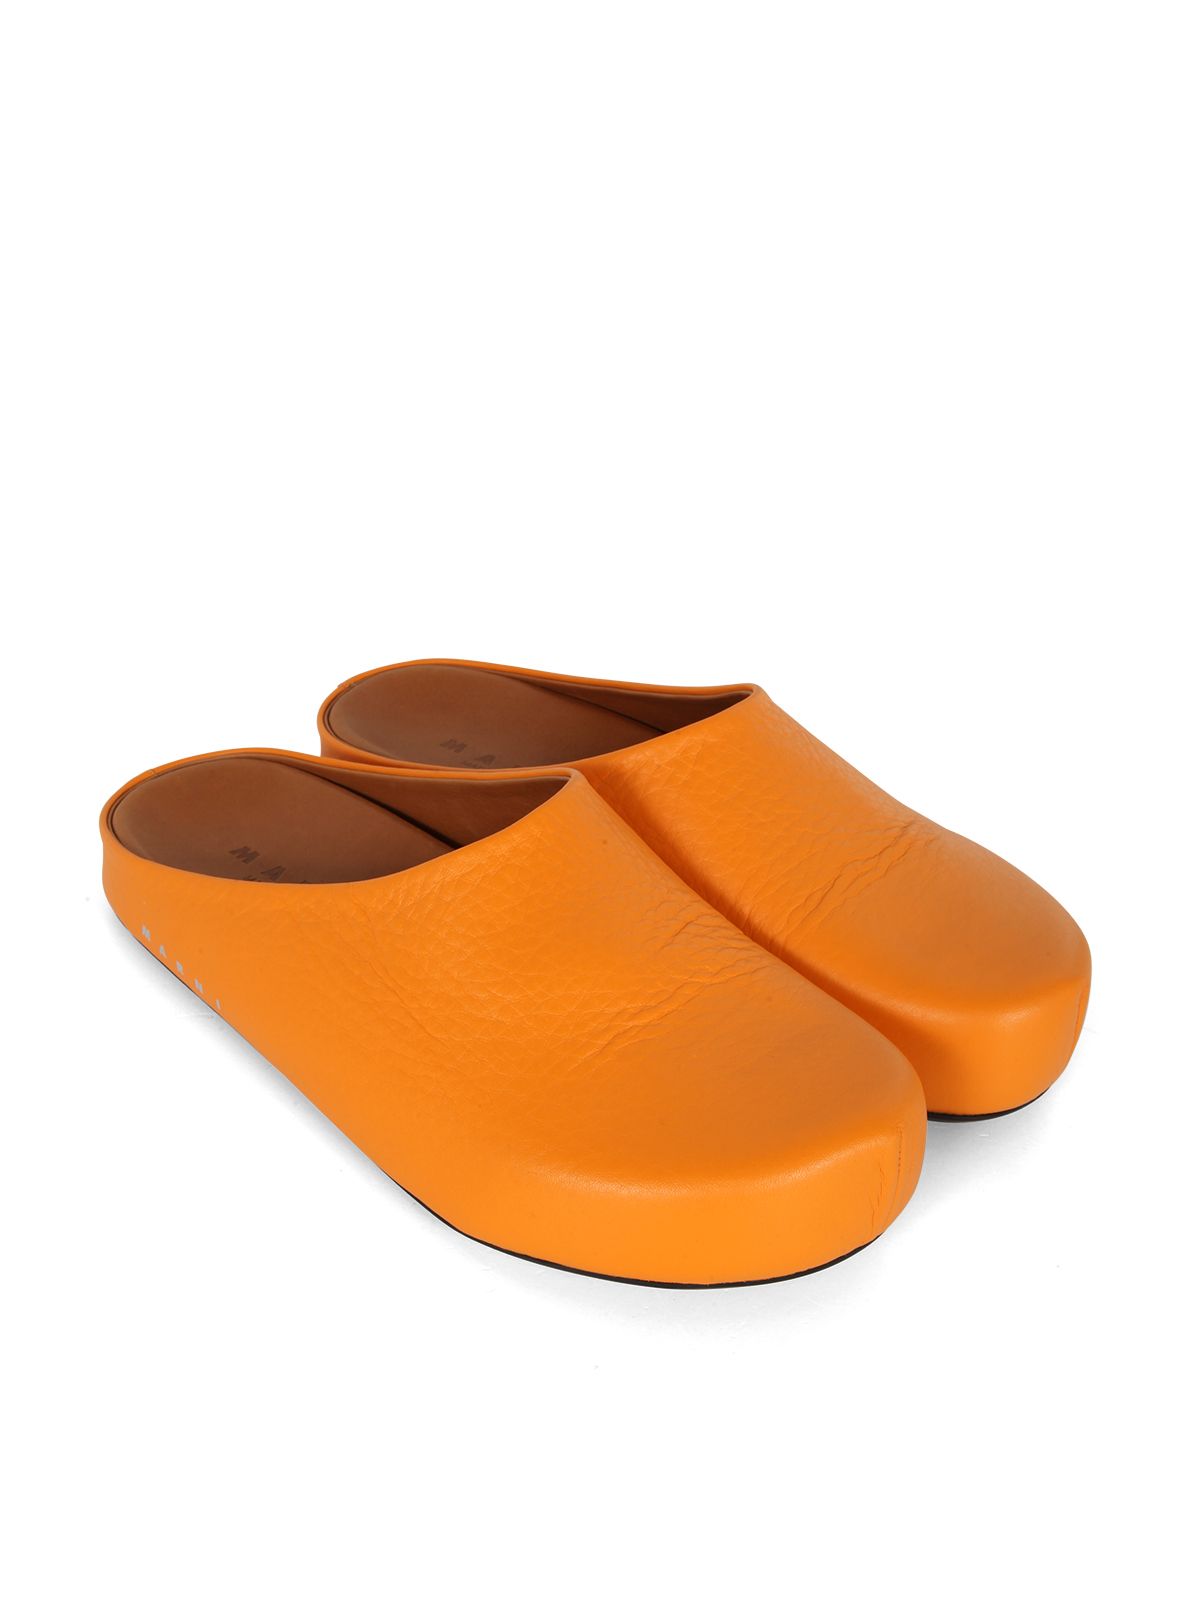 Shop Marni Mens Sandals: Fussbett Sabot